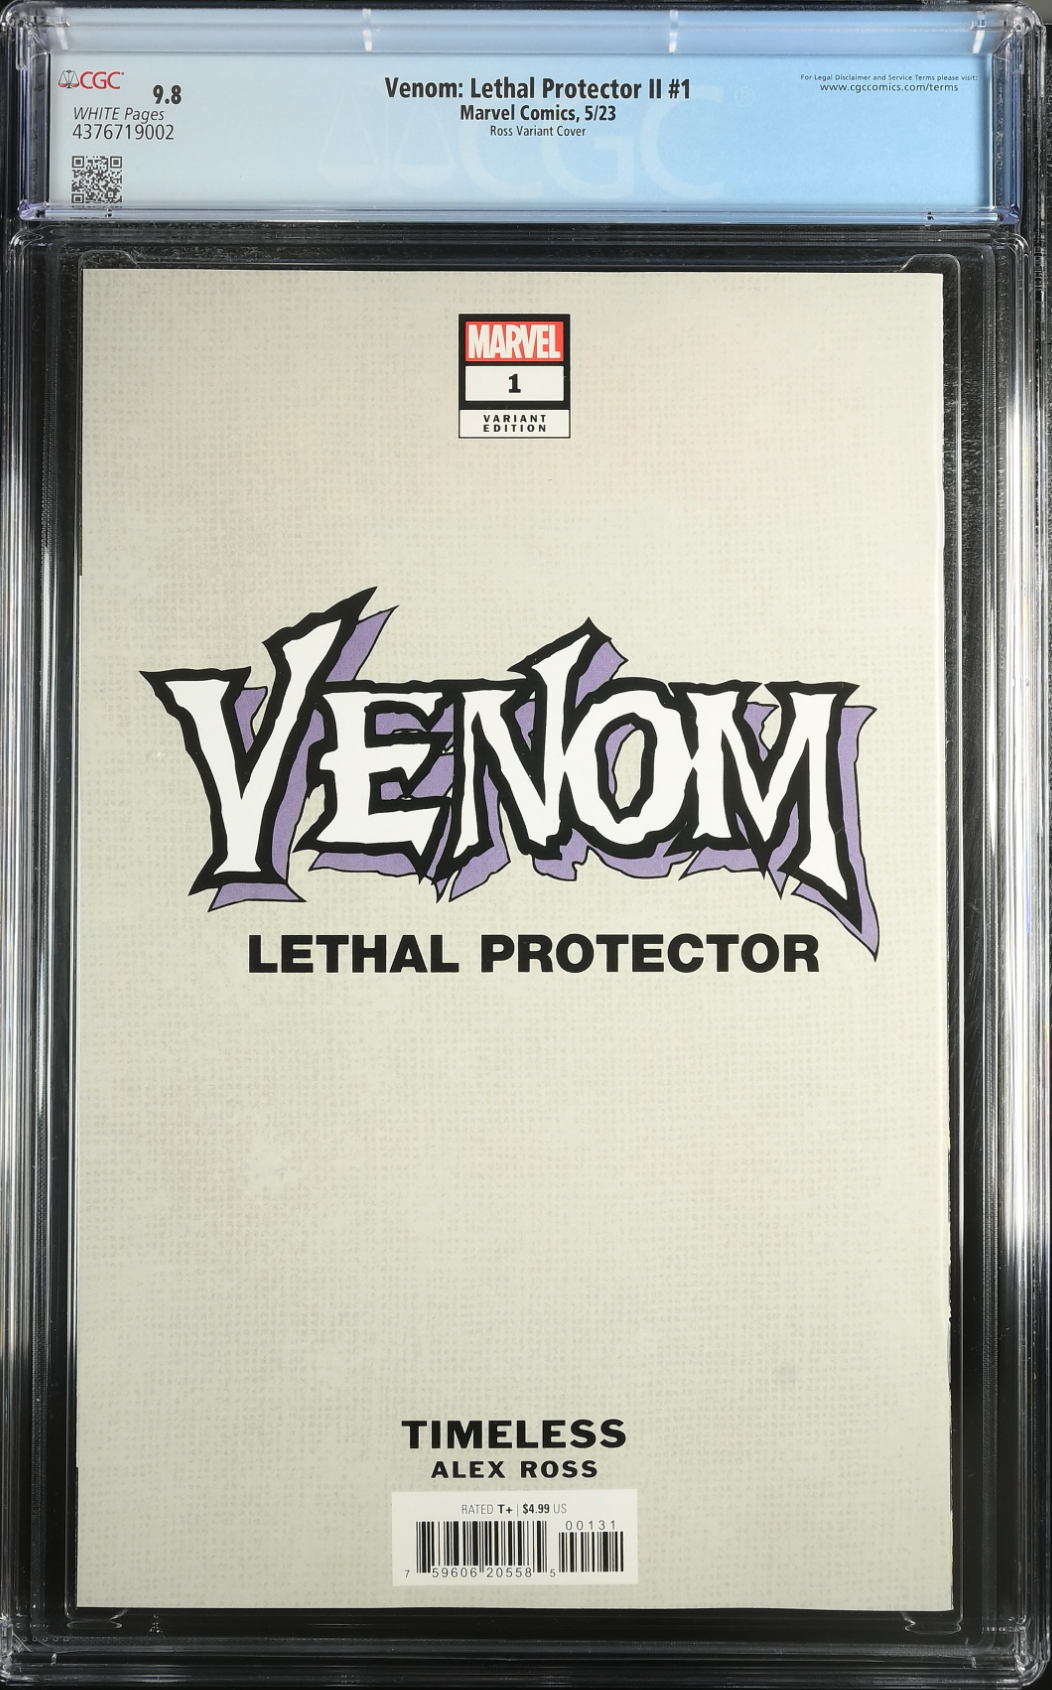 Venom: Lethal Protector II #1 Alex Ross Venom "Timeless" Variant CGC 9.8